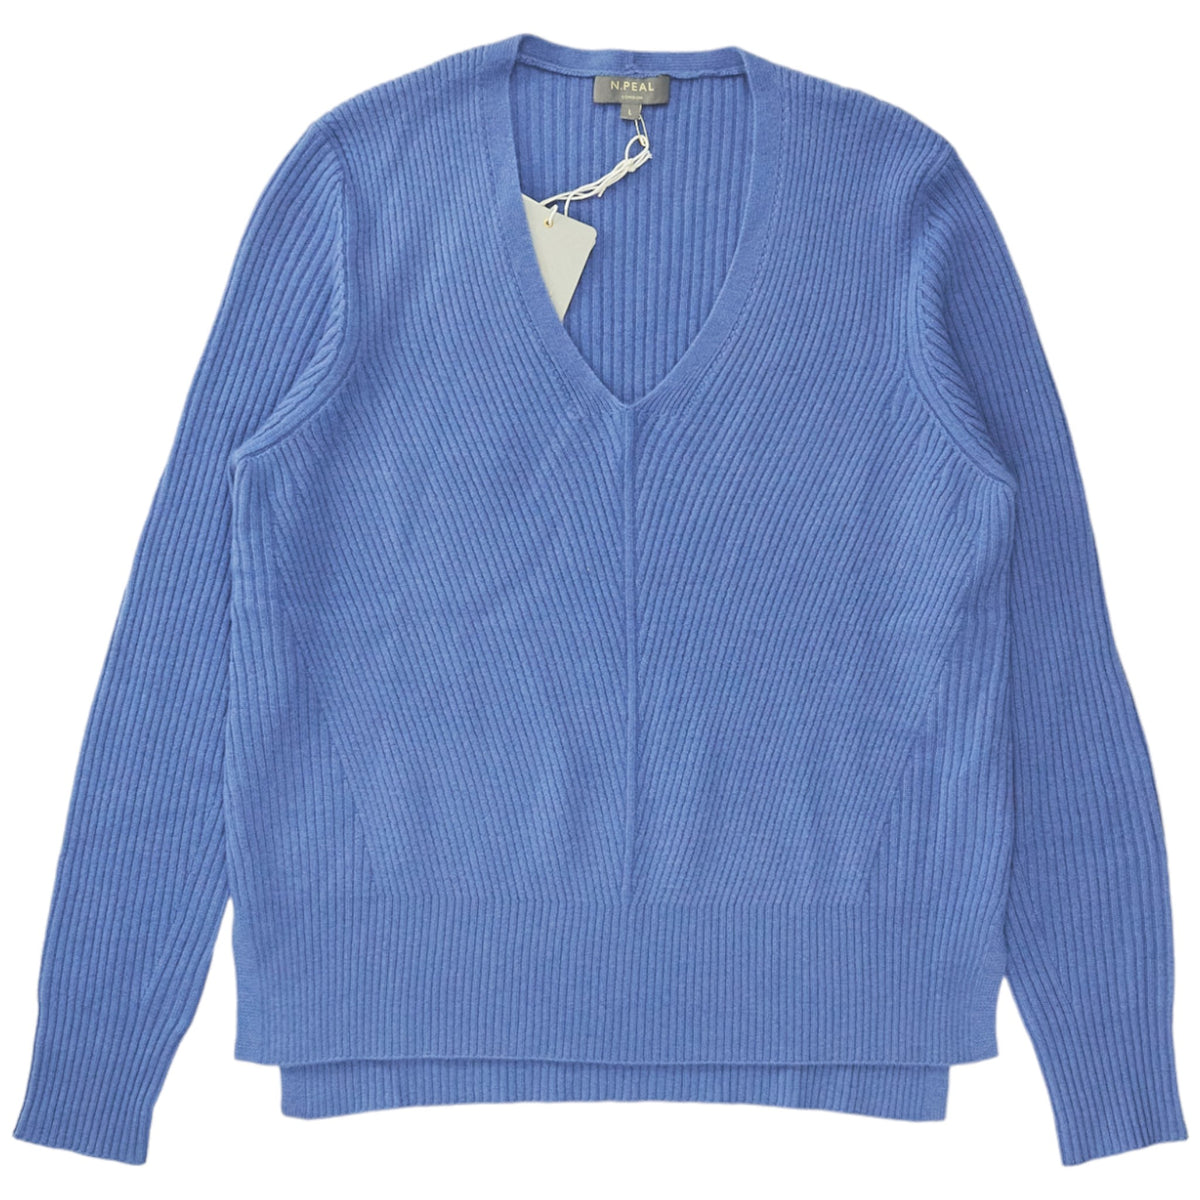 N. Peal Alpine Blue Rib Cashmere Sweater